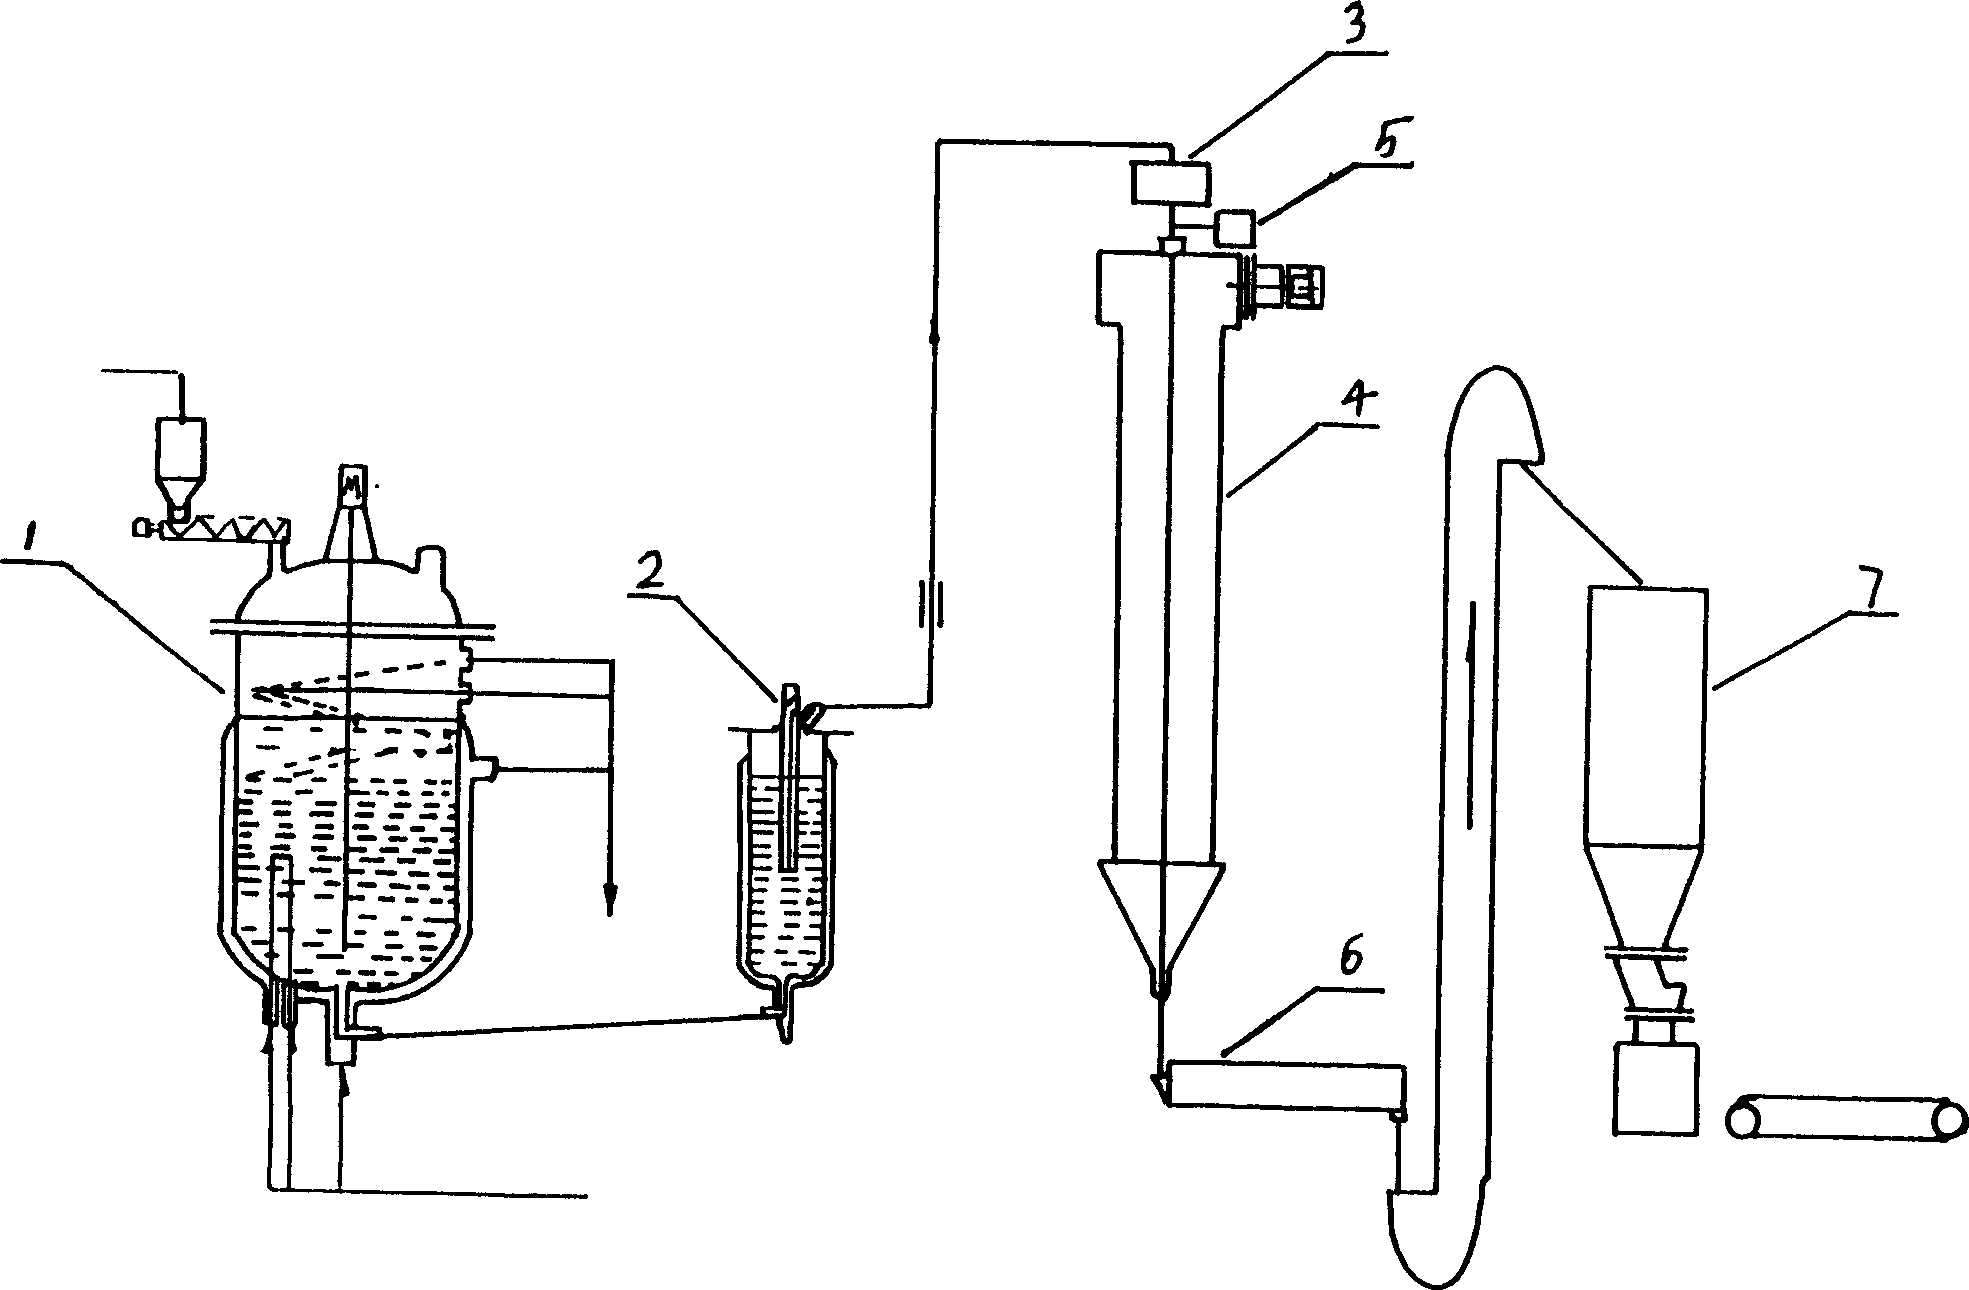 Method for manufacturing granulated sodium nitrite